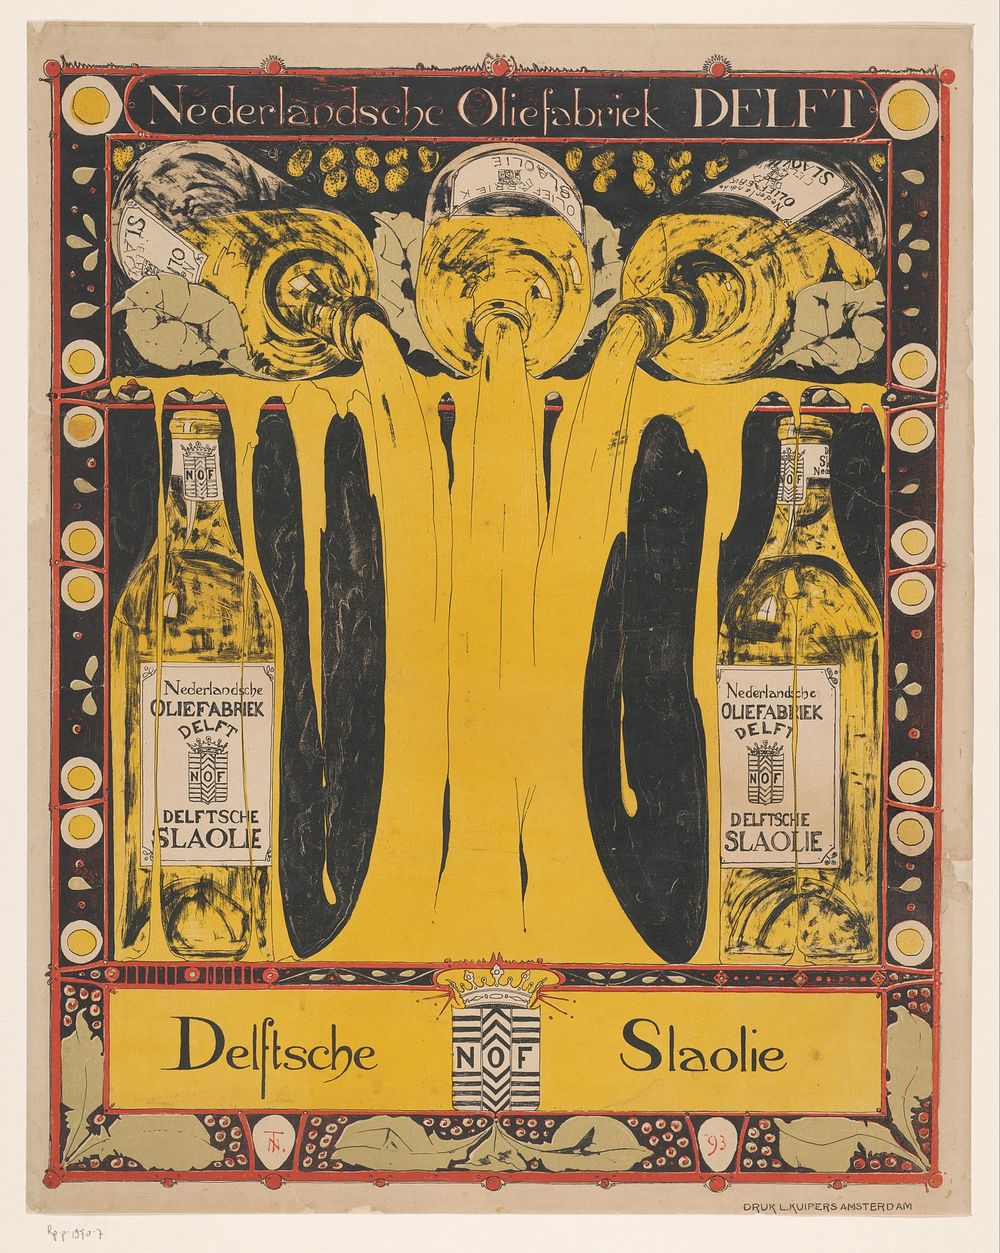 Nederlandsche Oliefabriek Delft Delftsche Slaolie (1893) by Theo Nieuwenhuis and L Kuipers